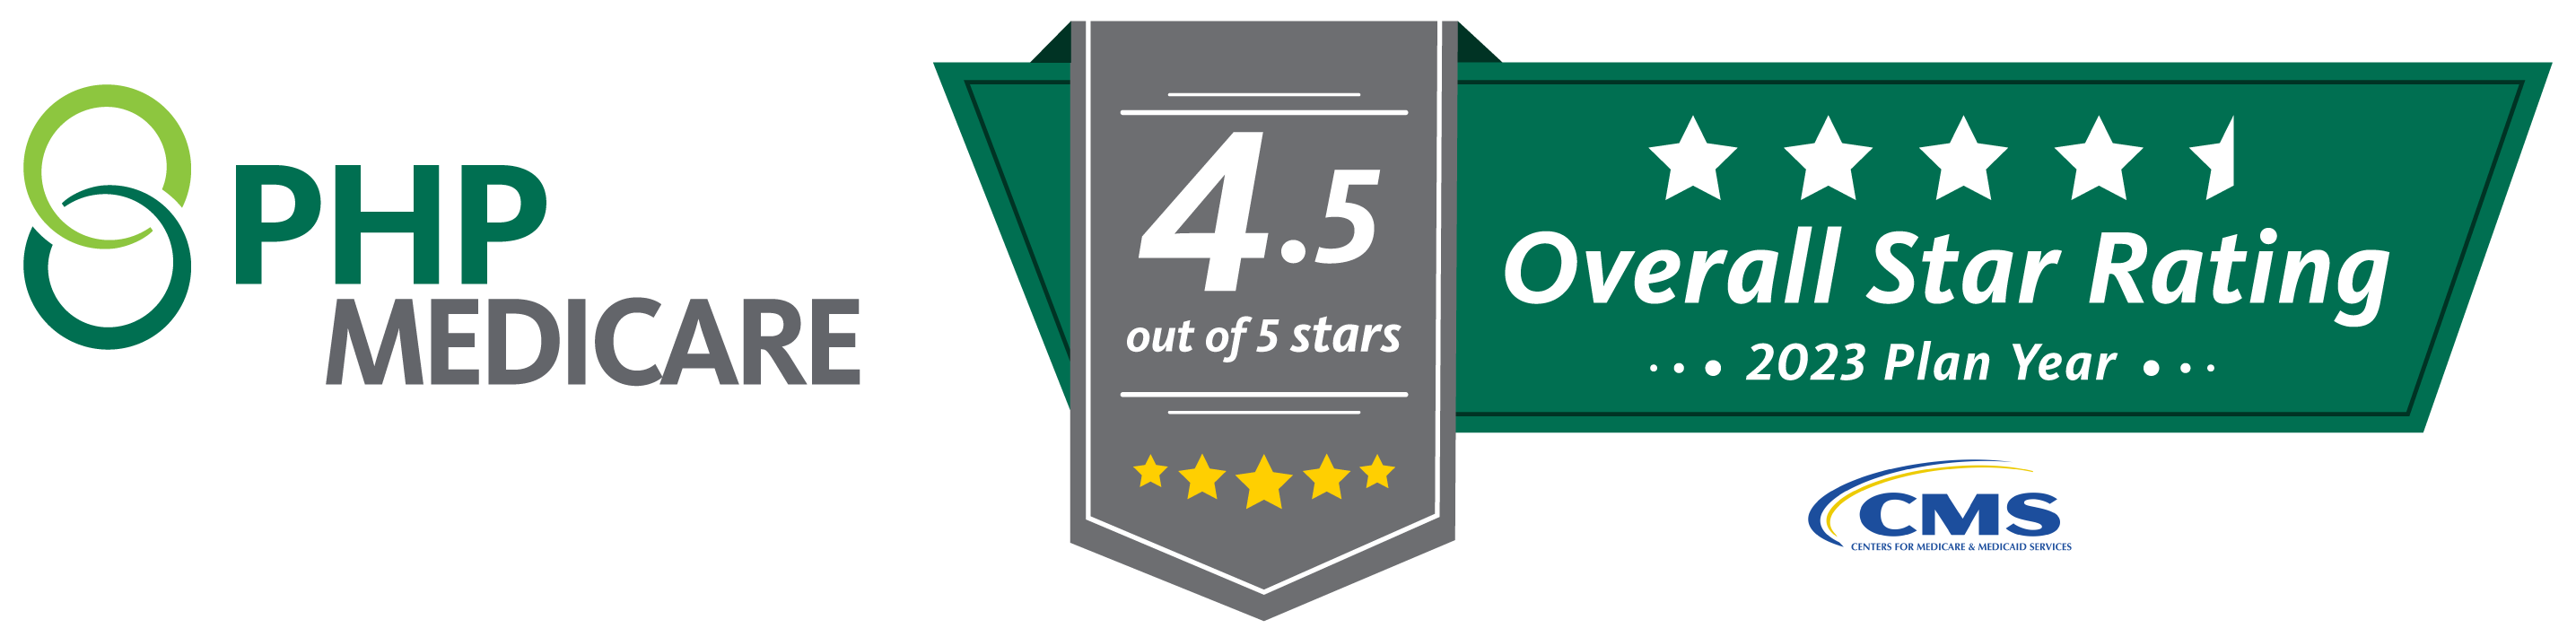 PHP Medicare_2023 Star Rating_Badge